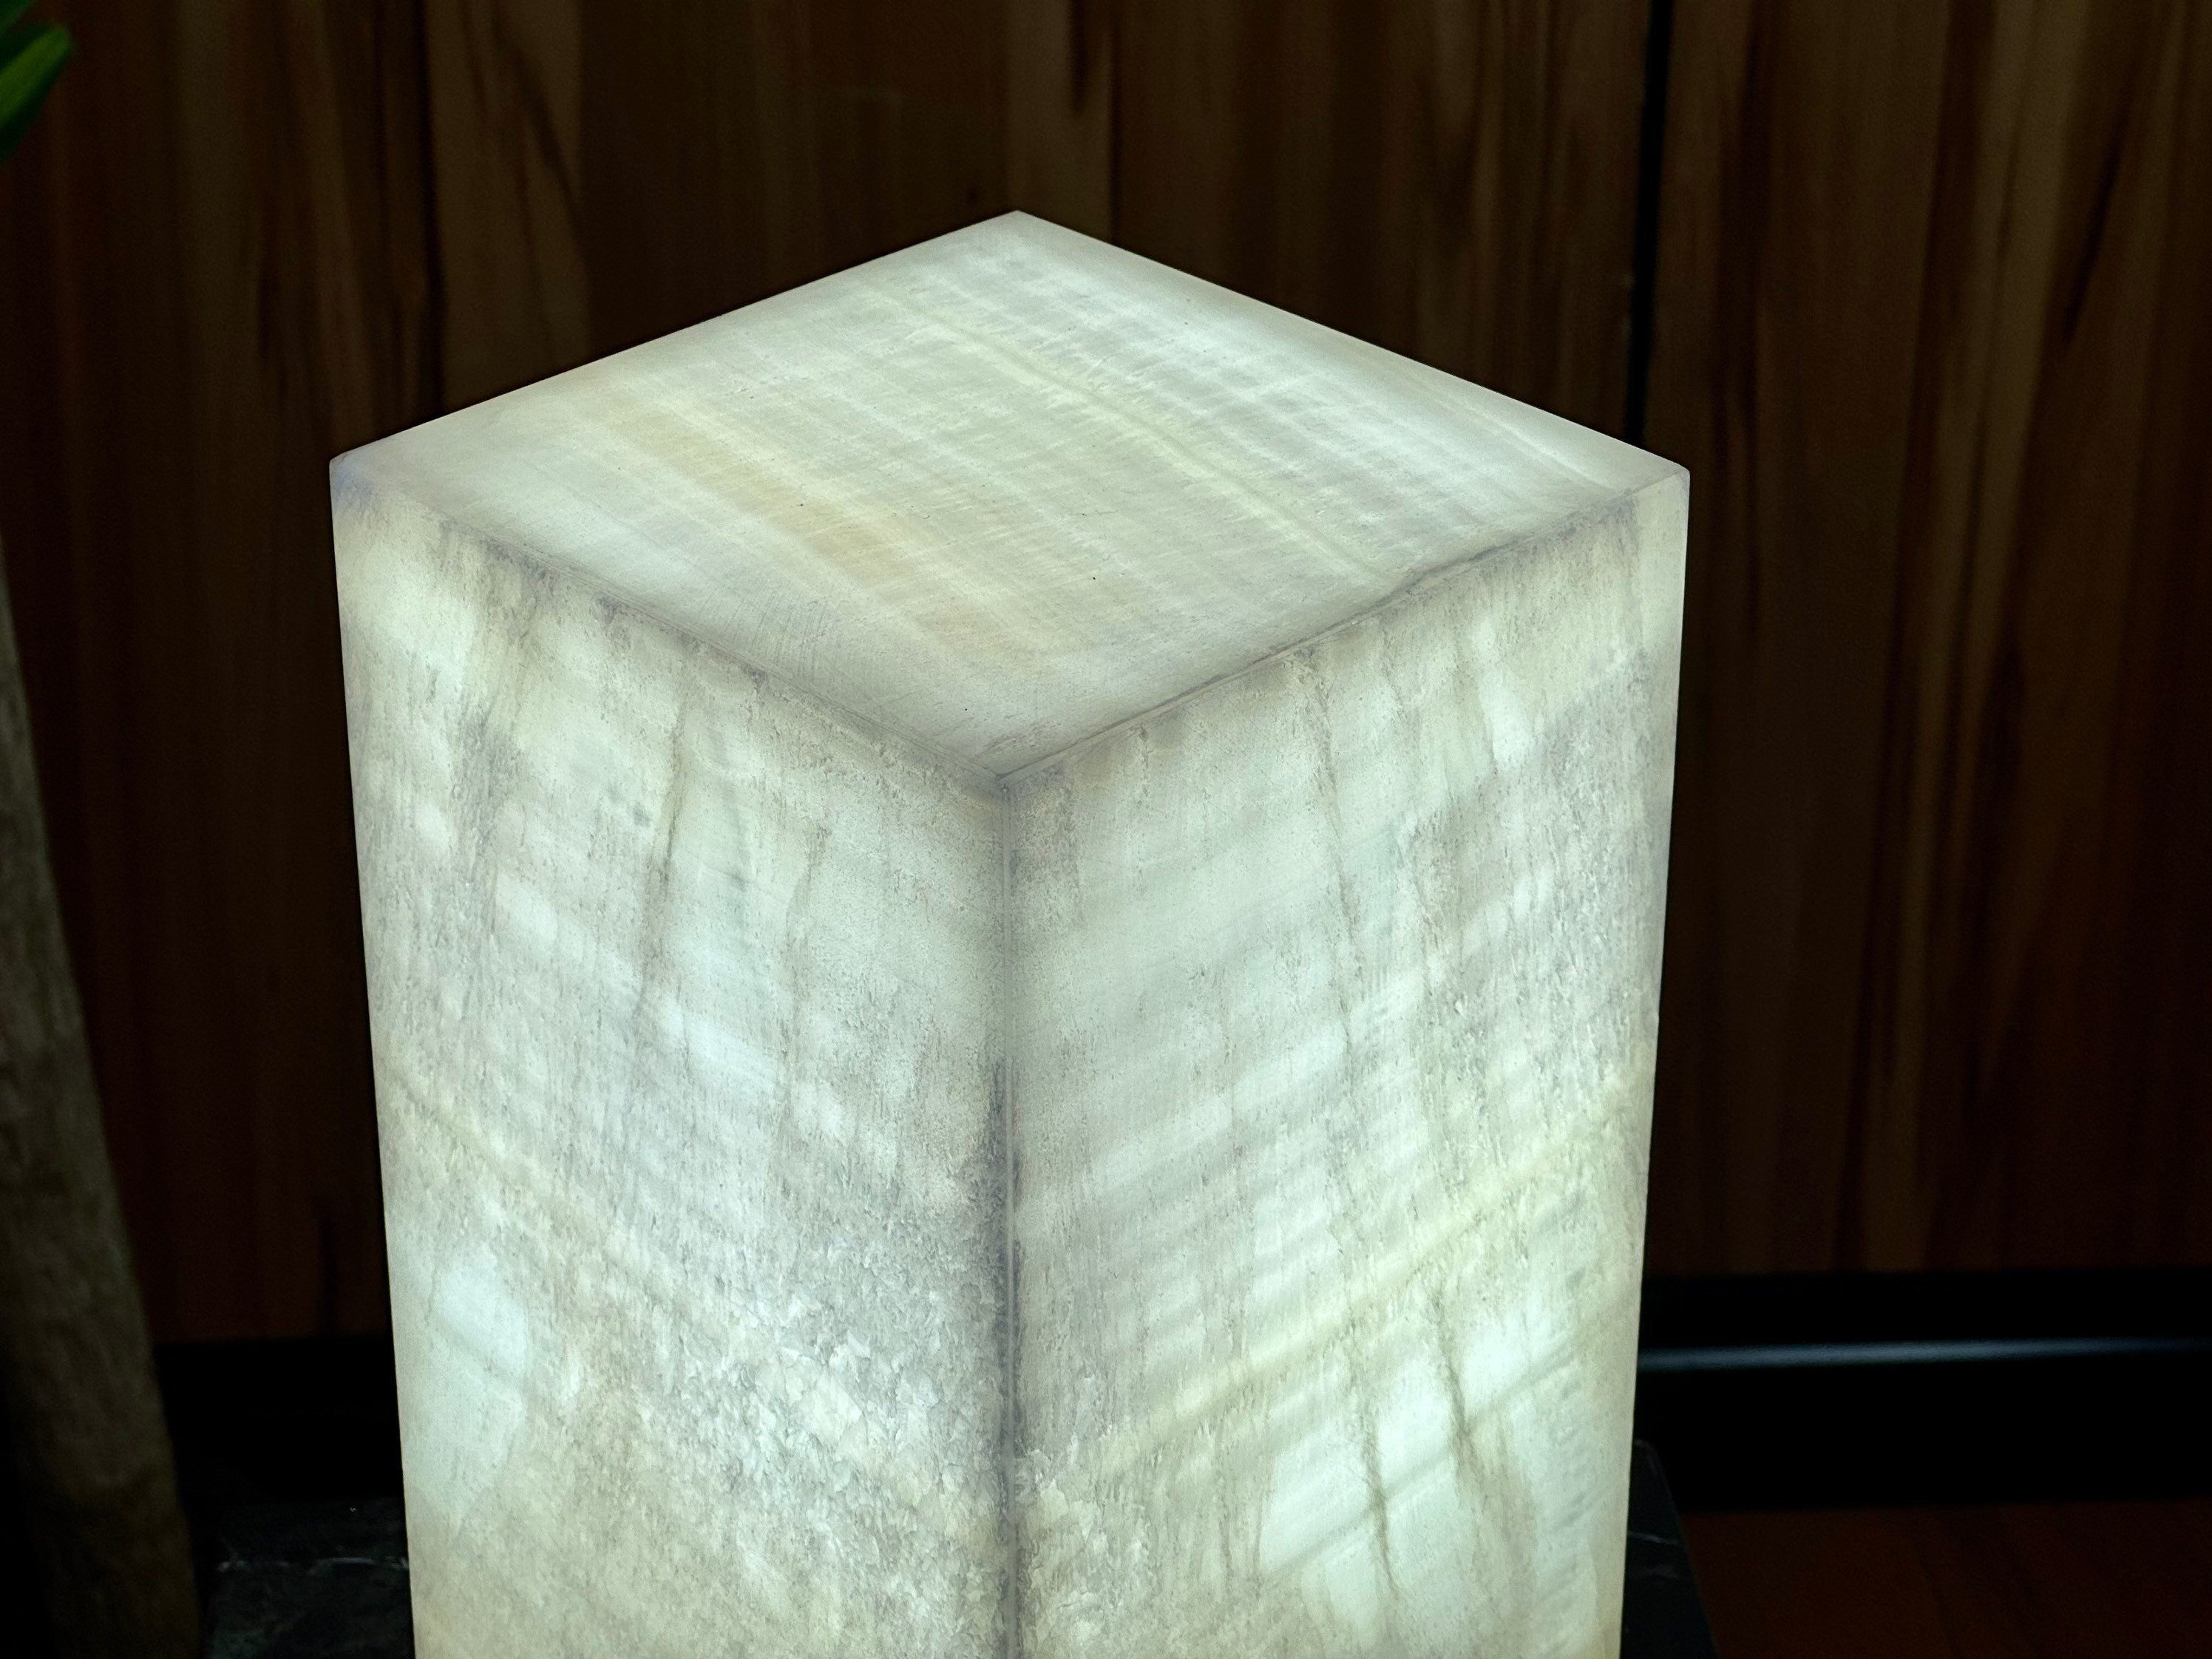 Textured White Onyx Lamp - rectangular Design - Home and Decor - Illuminating Lamp - Salt Lamp